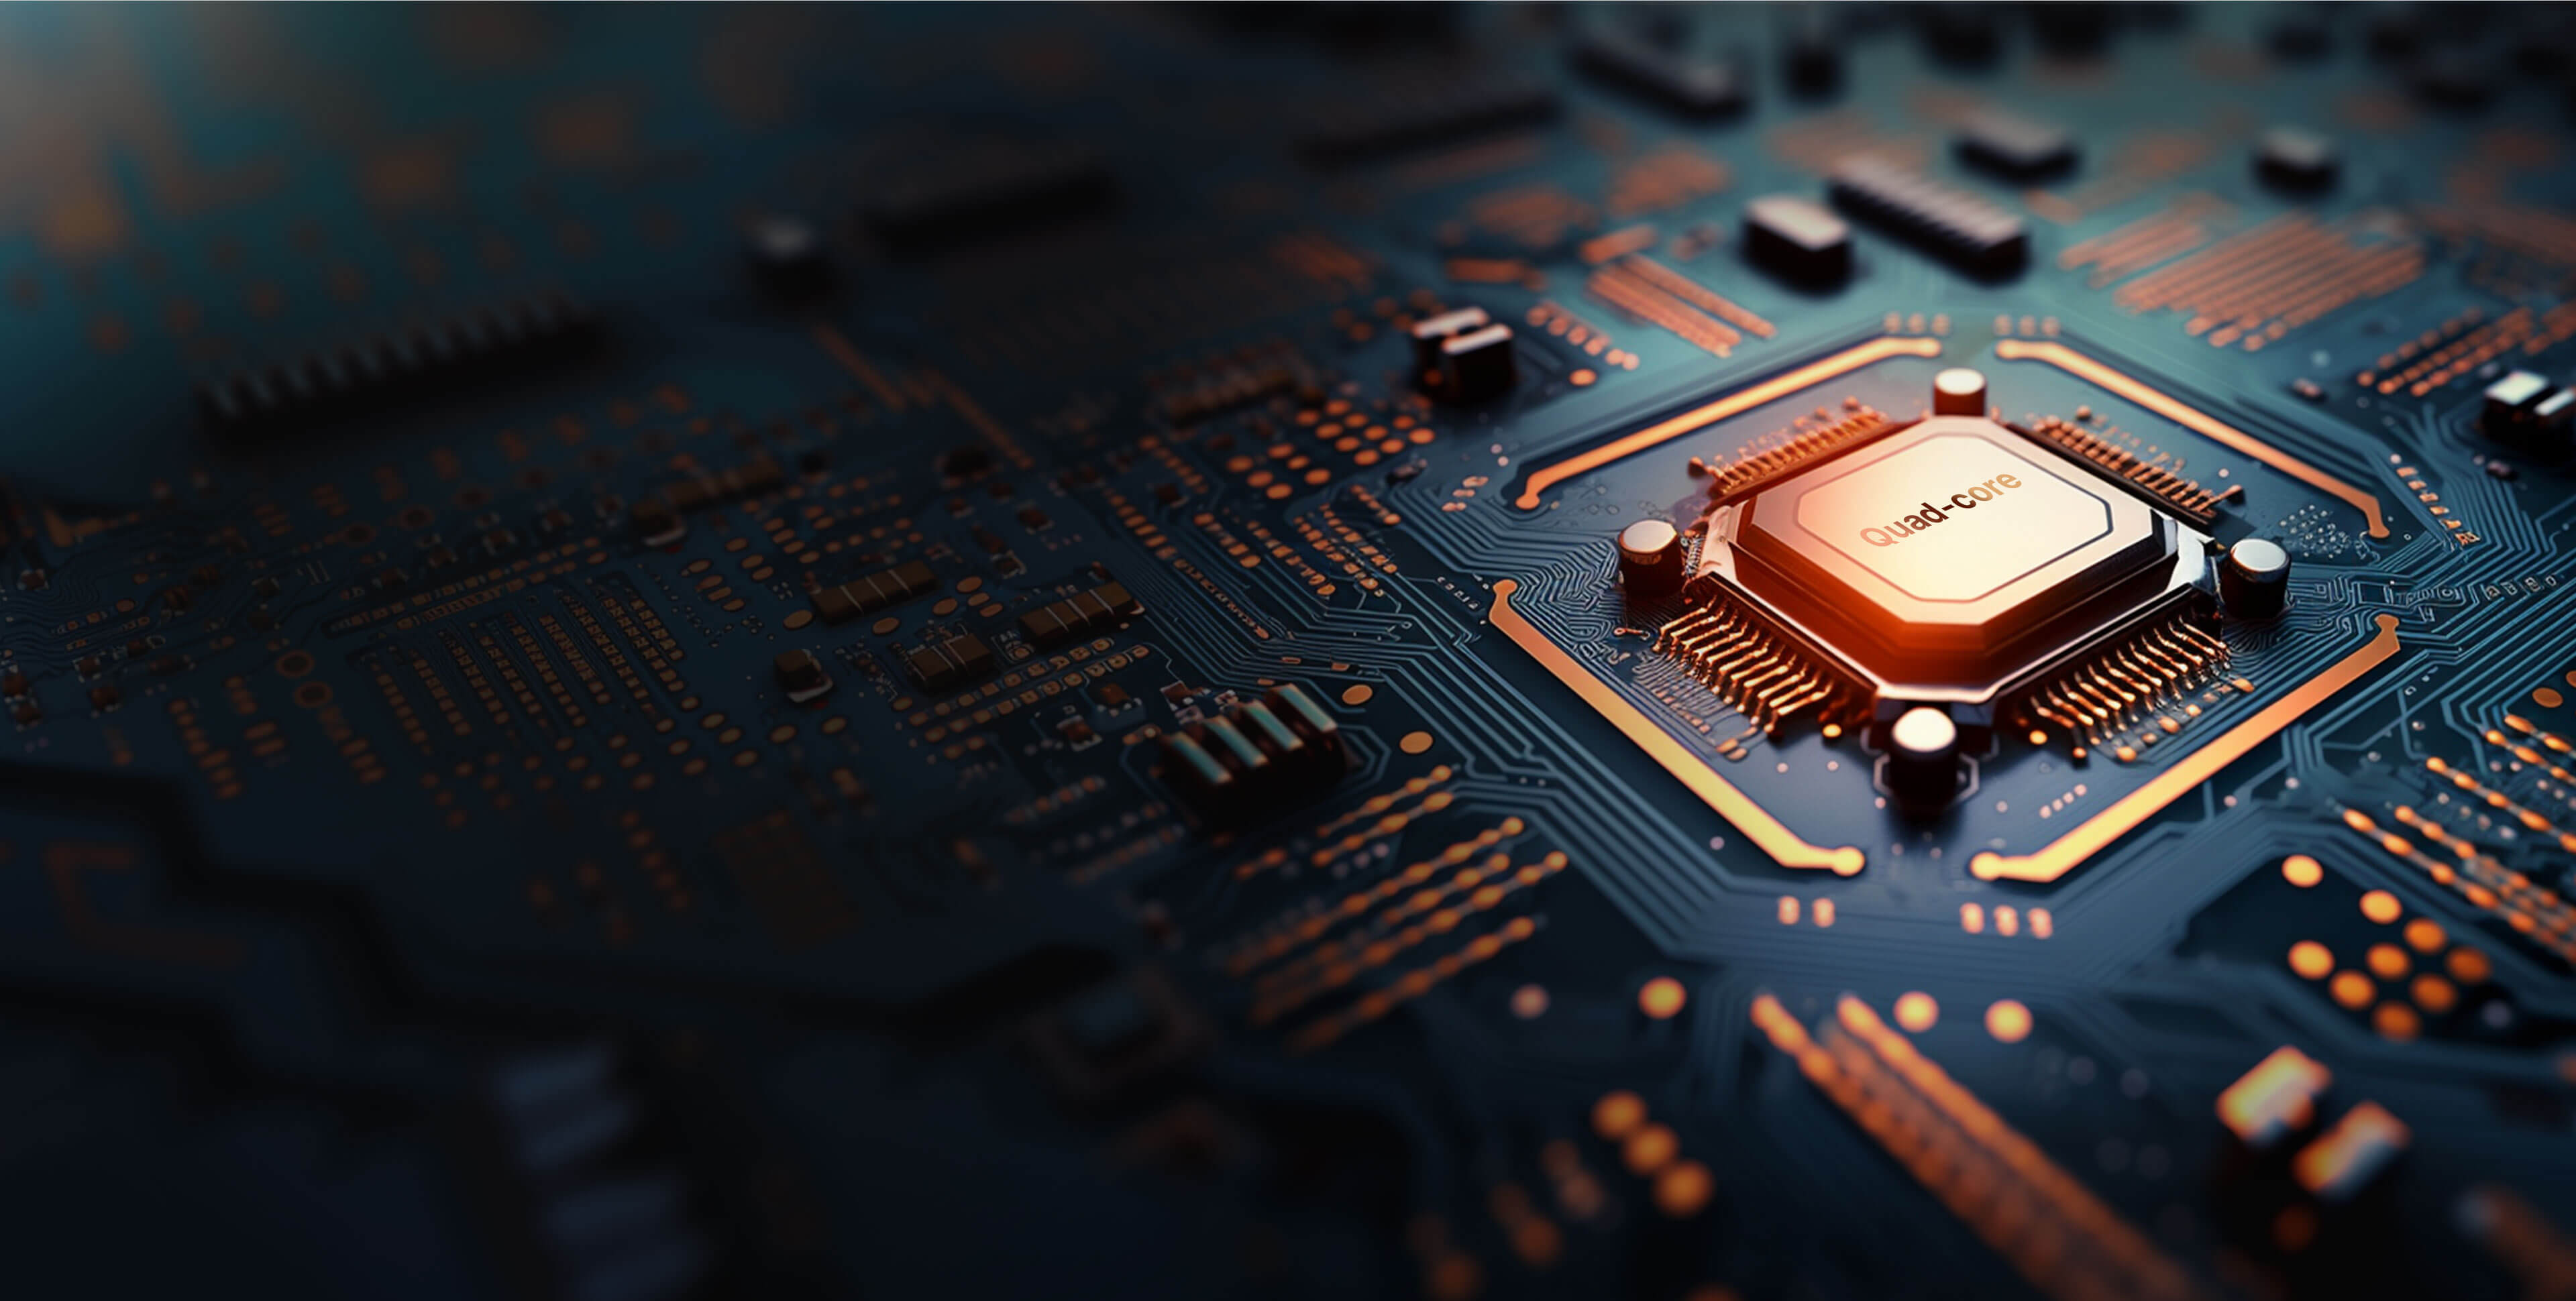 Quad-core processor for better performance